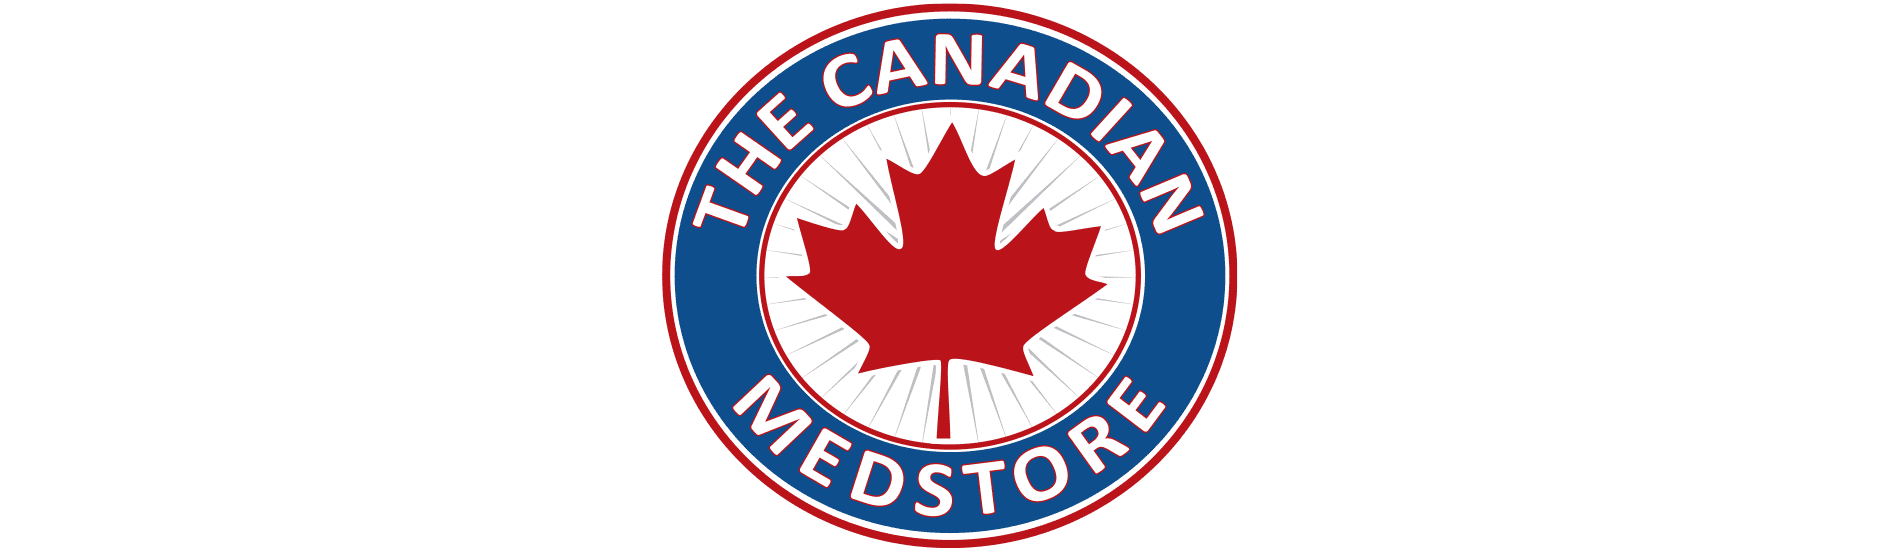 The Canadian Medstore Logo